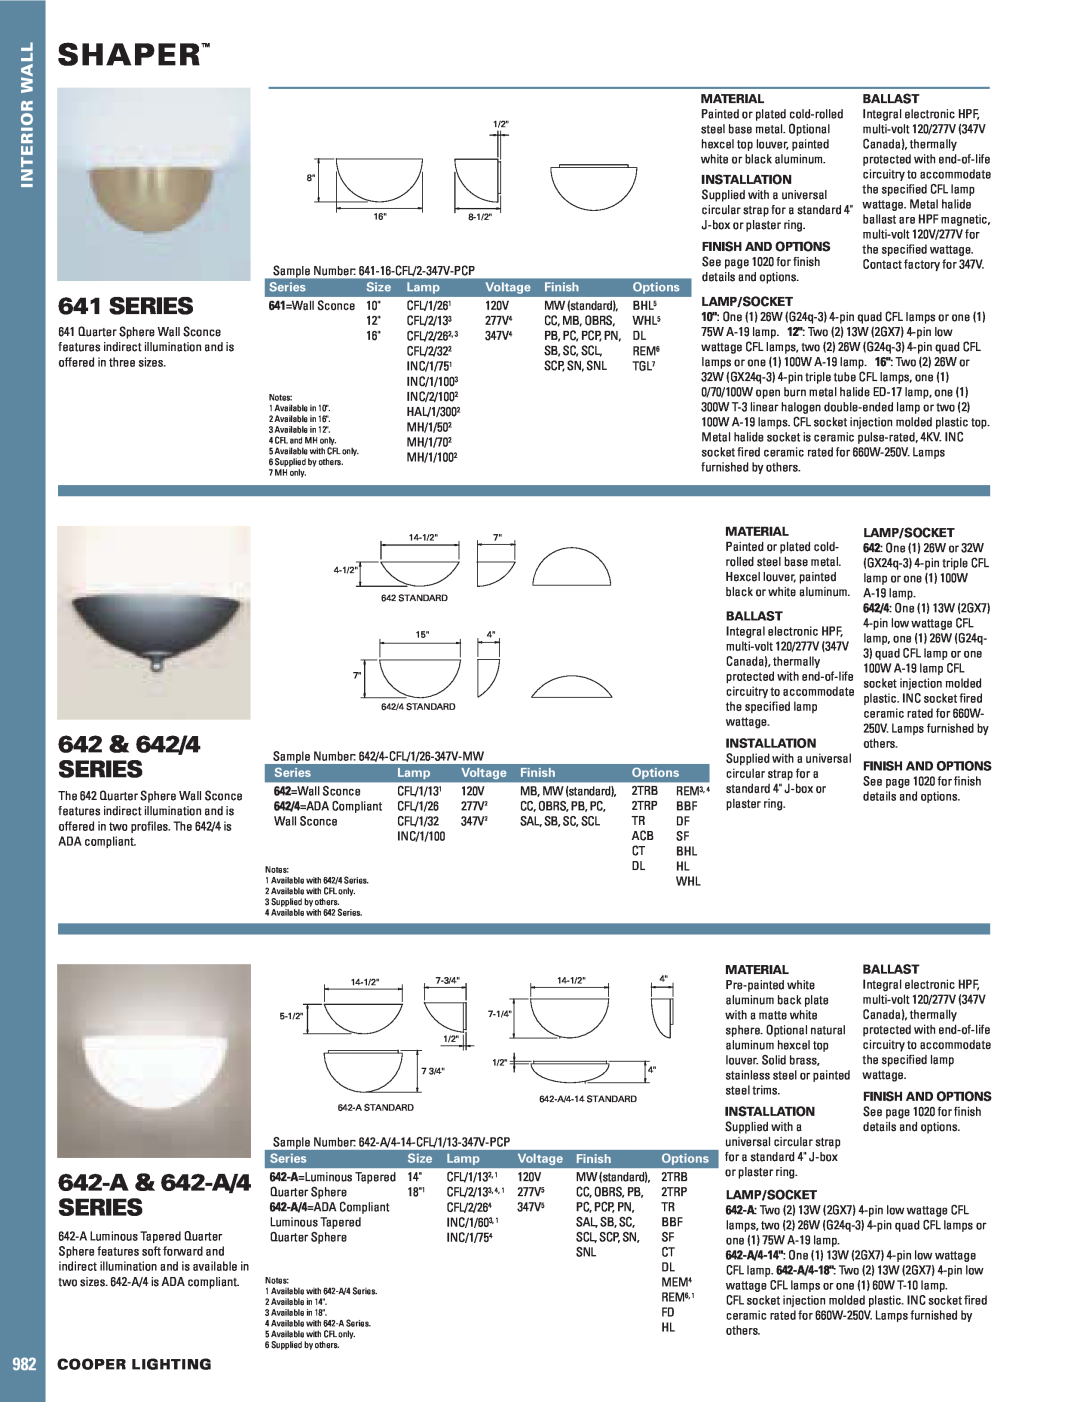 Cooper Lighting manual Shaper, Series, 642 & 642/4 SERIES, 642-A& 642-A/4, Wall, Interior, 982COOPER LIGHTING, Options 